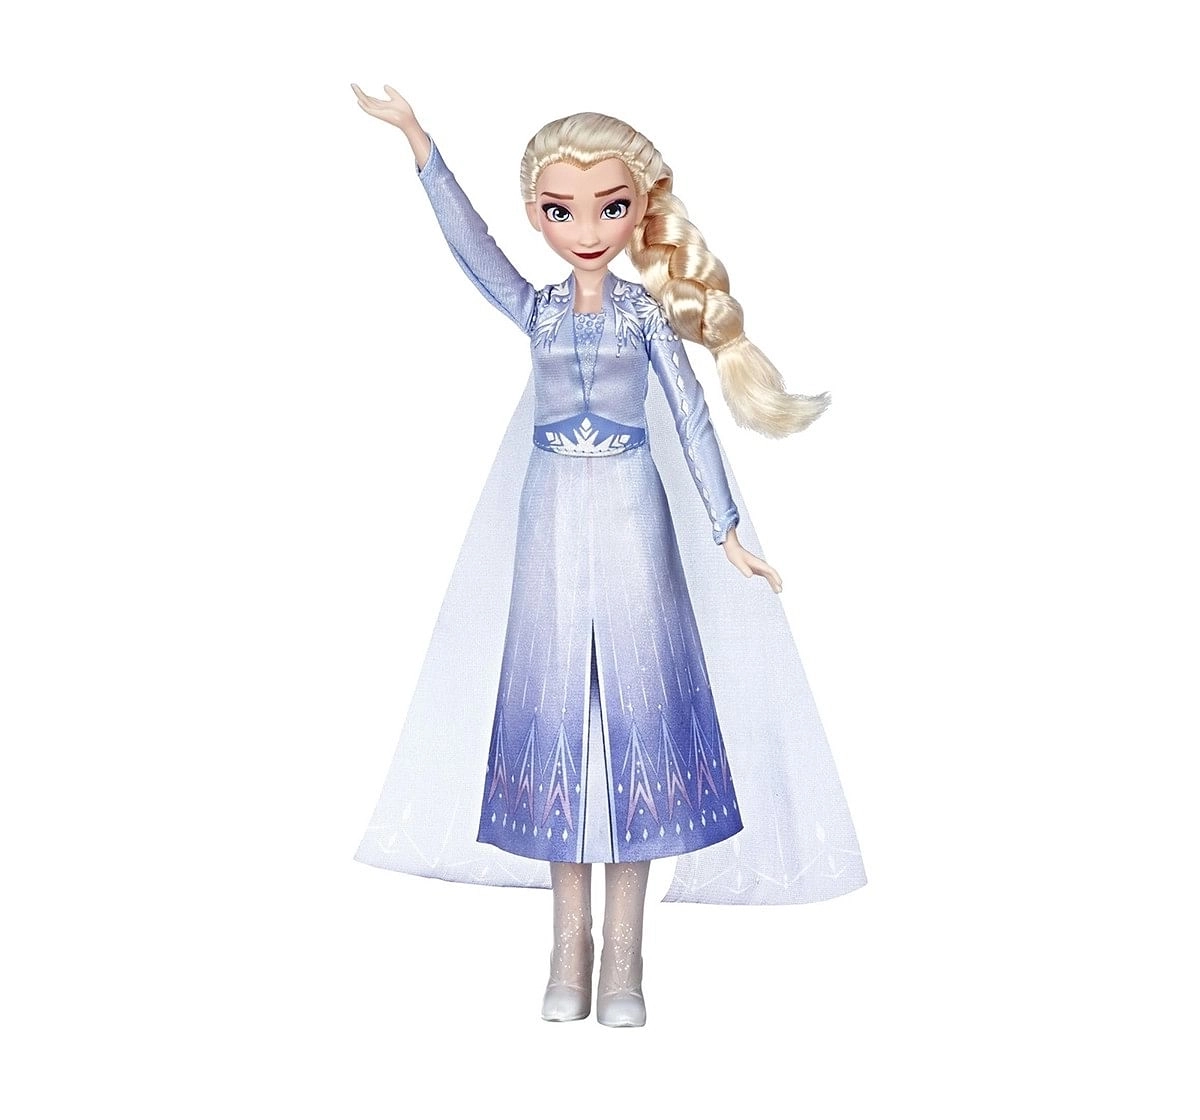 Disdney Frozen Elsa Assorted Dolls & Accessories for Girls age 3Y+ 